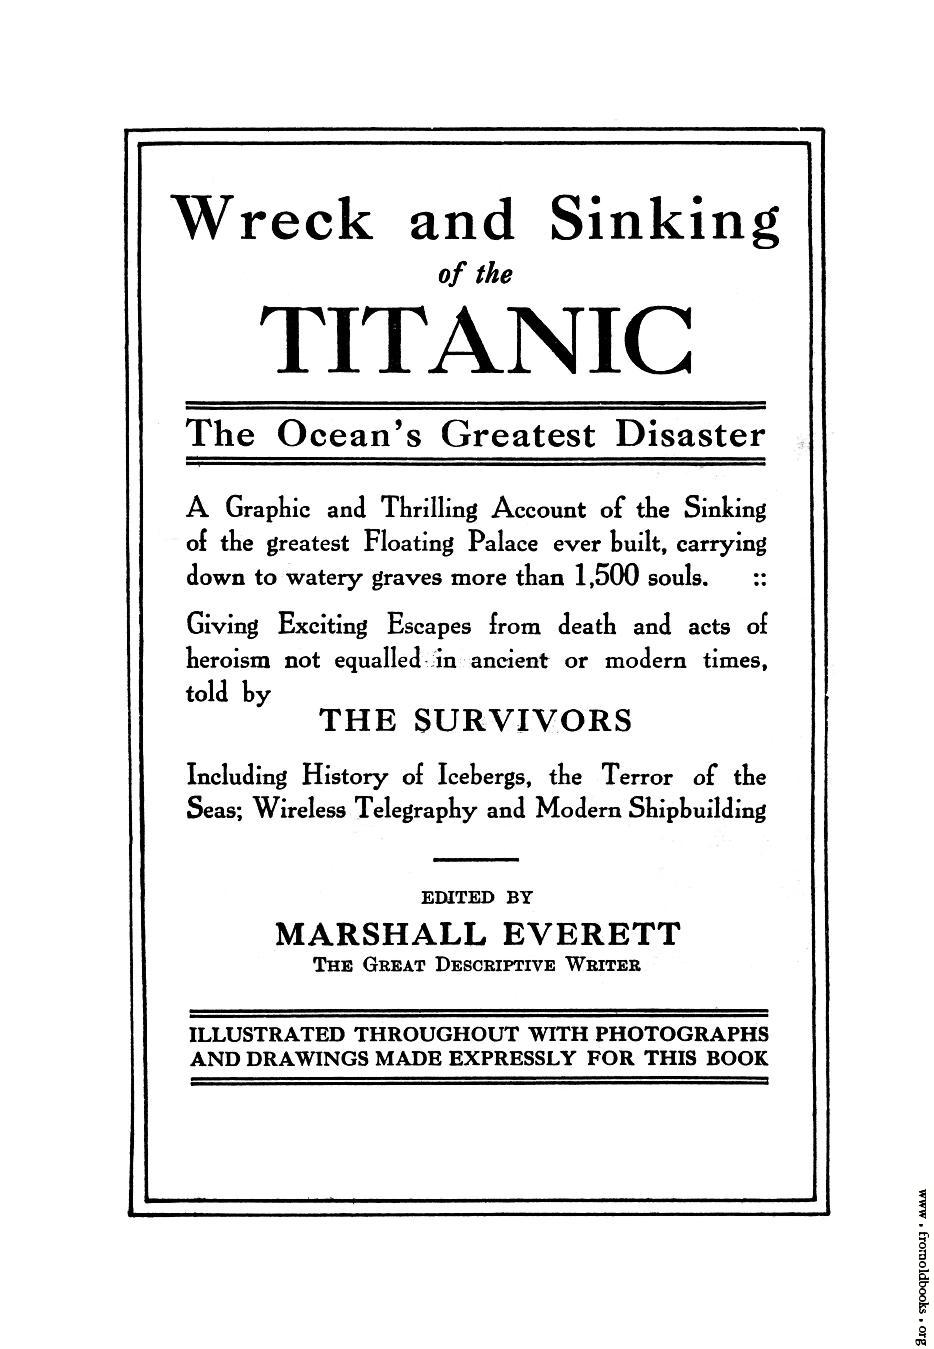 titanic book review essay